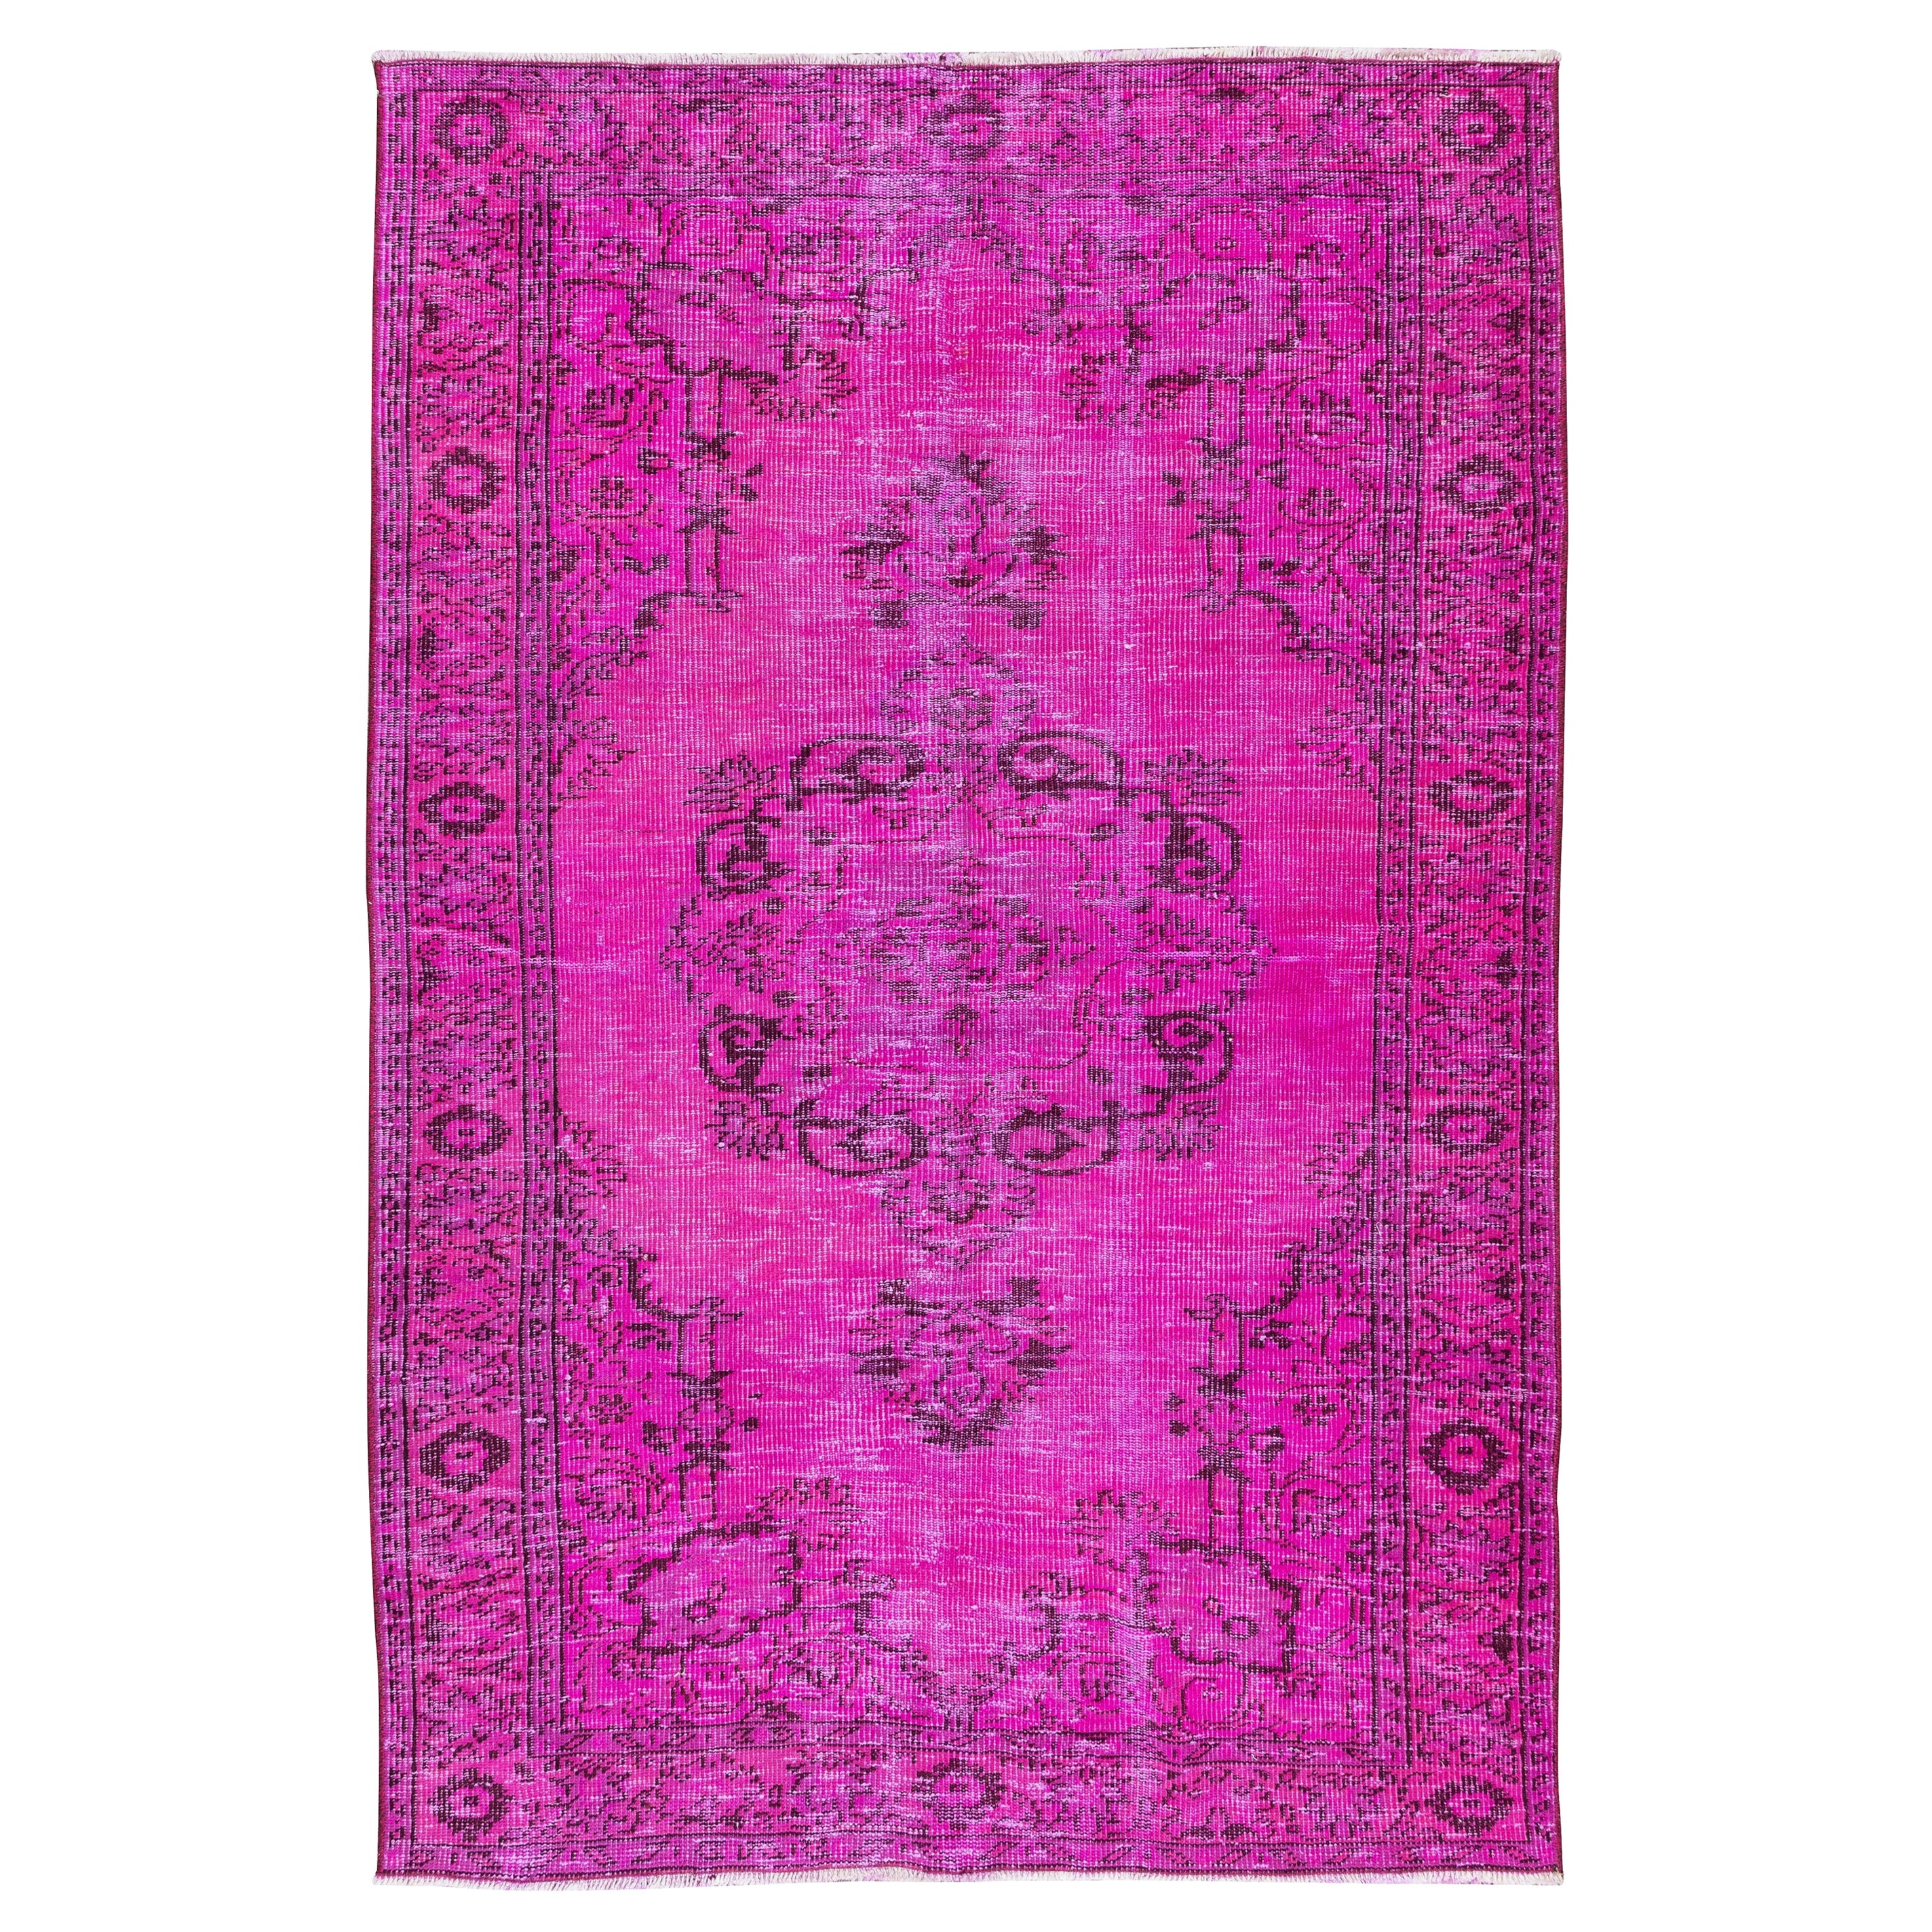 5x7.8 Ft Handmade Turkish Carpet, Fuchsia Pink Area Rug, Woolen Floor Covering For Sale